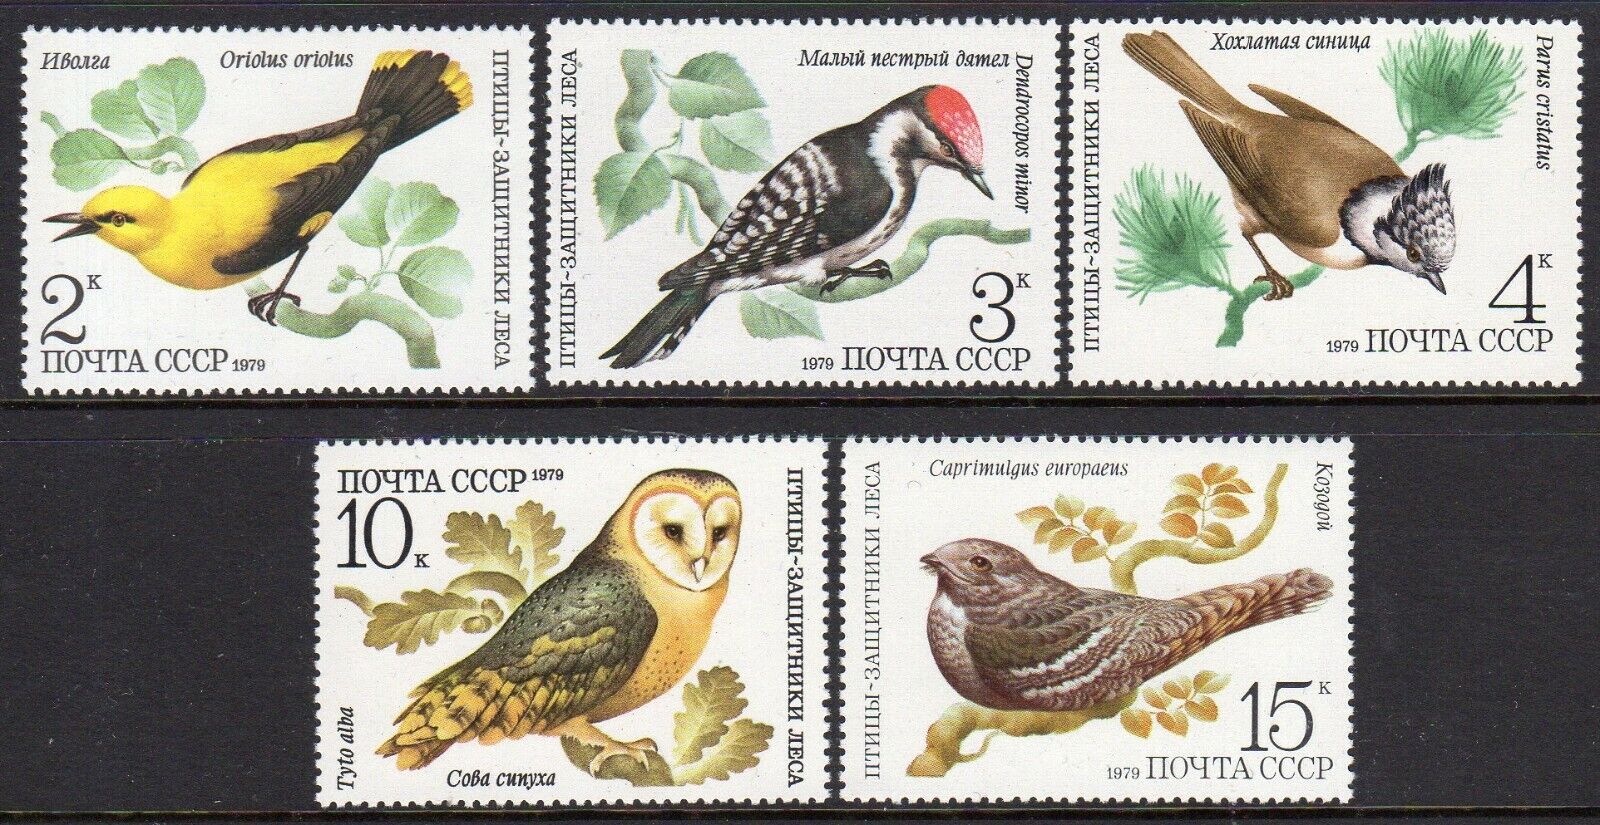 Birds - Russia 1979 set fine fresh MNH